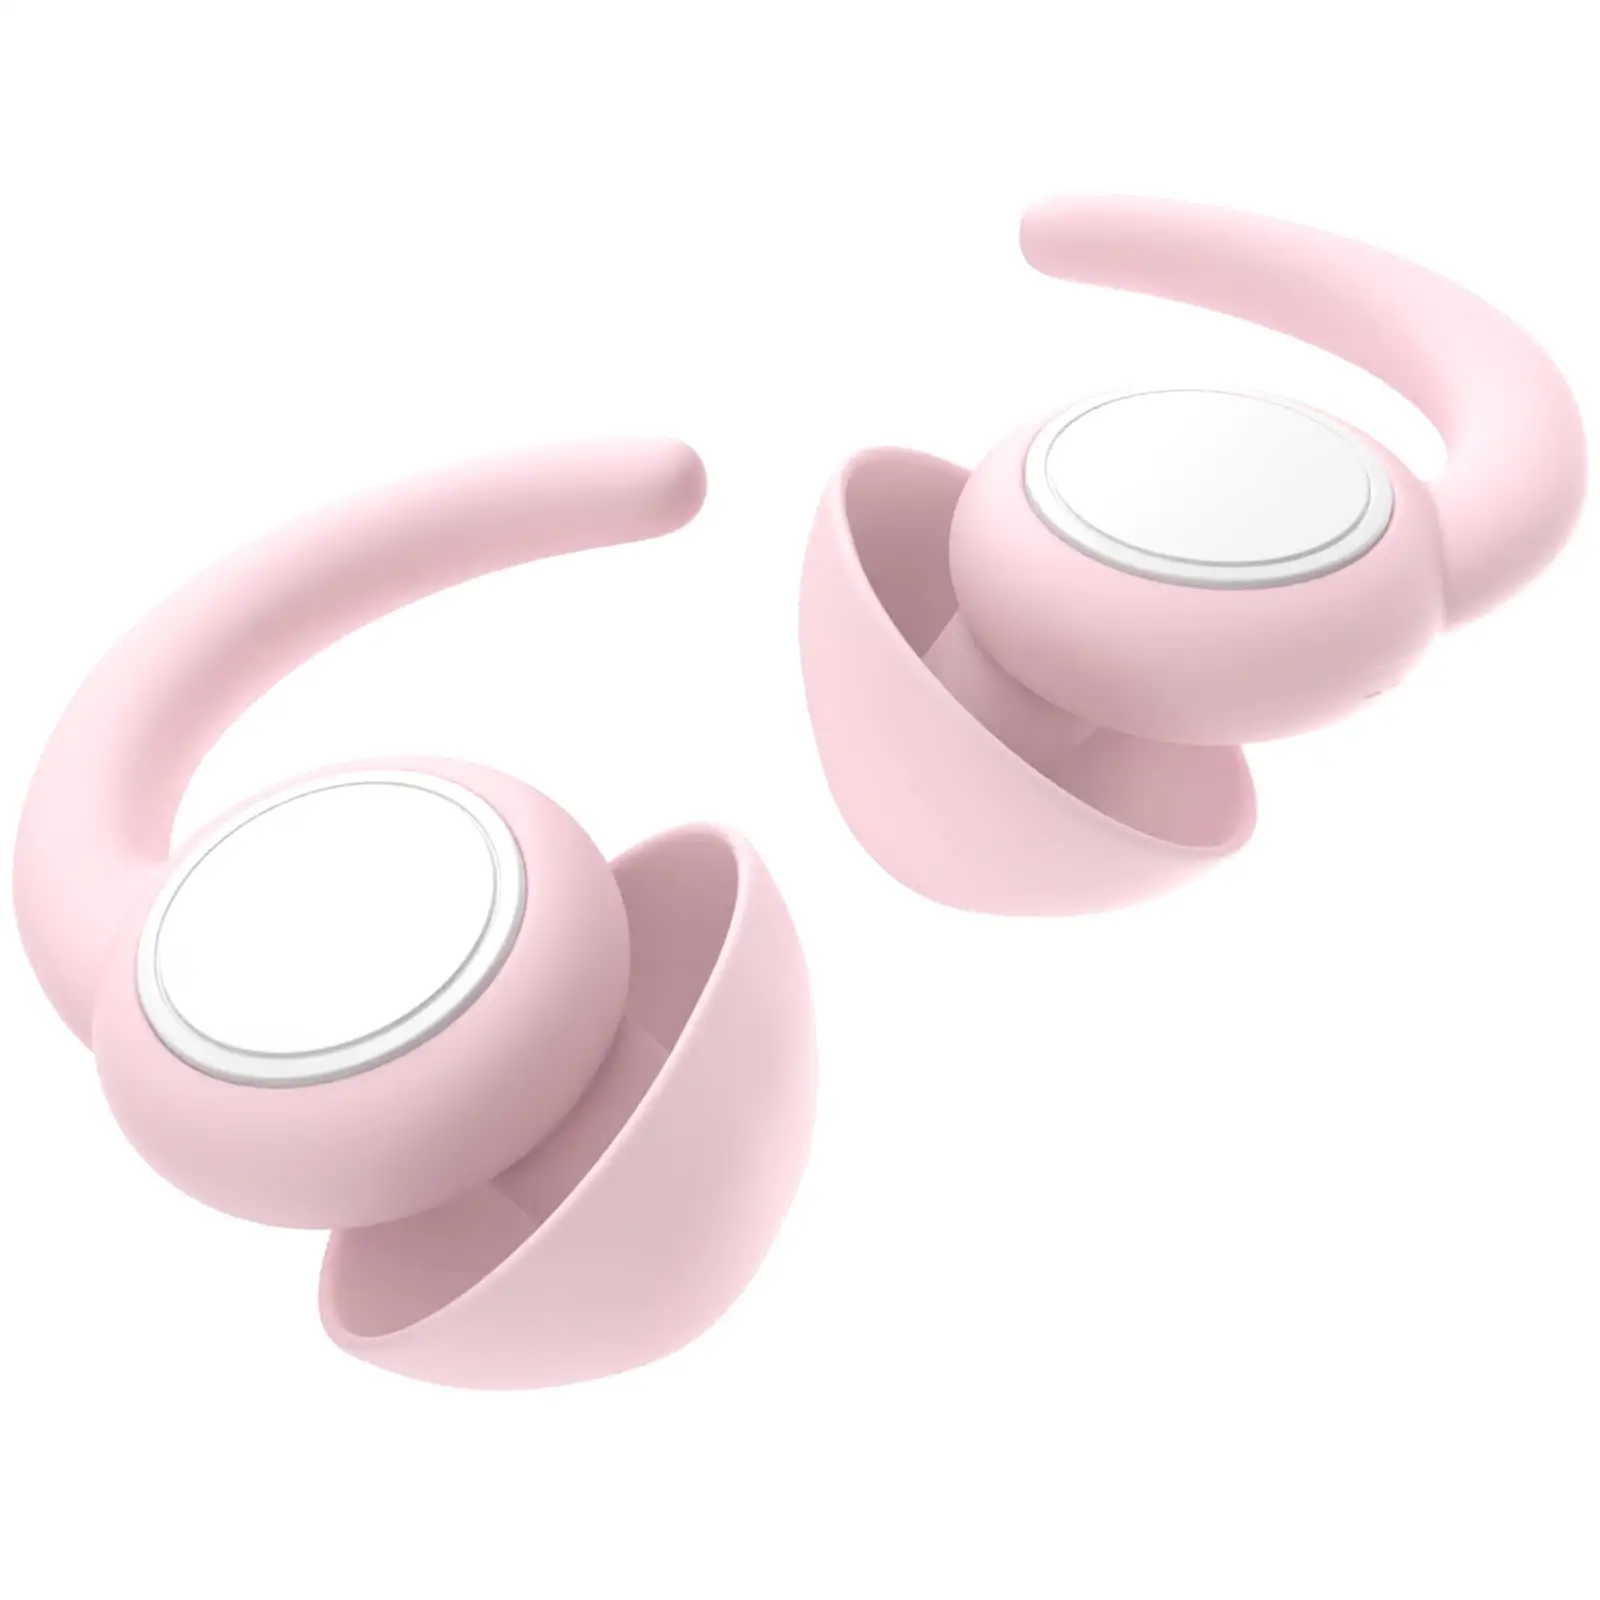 High quality noise-proof Reusable ear plugs silicone Waterproof Noise Reduction Earplugs comfortable Safety Earplugs sleep